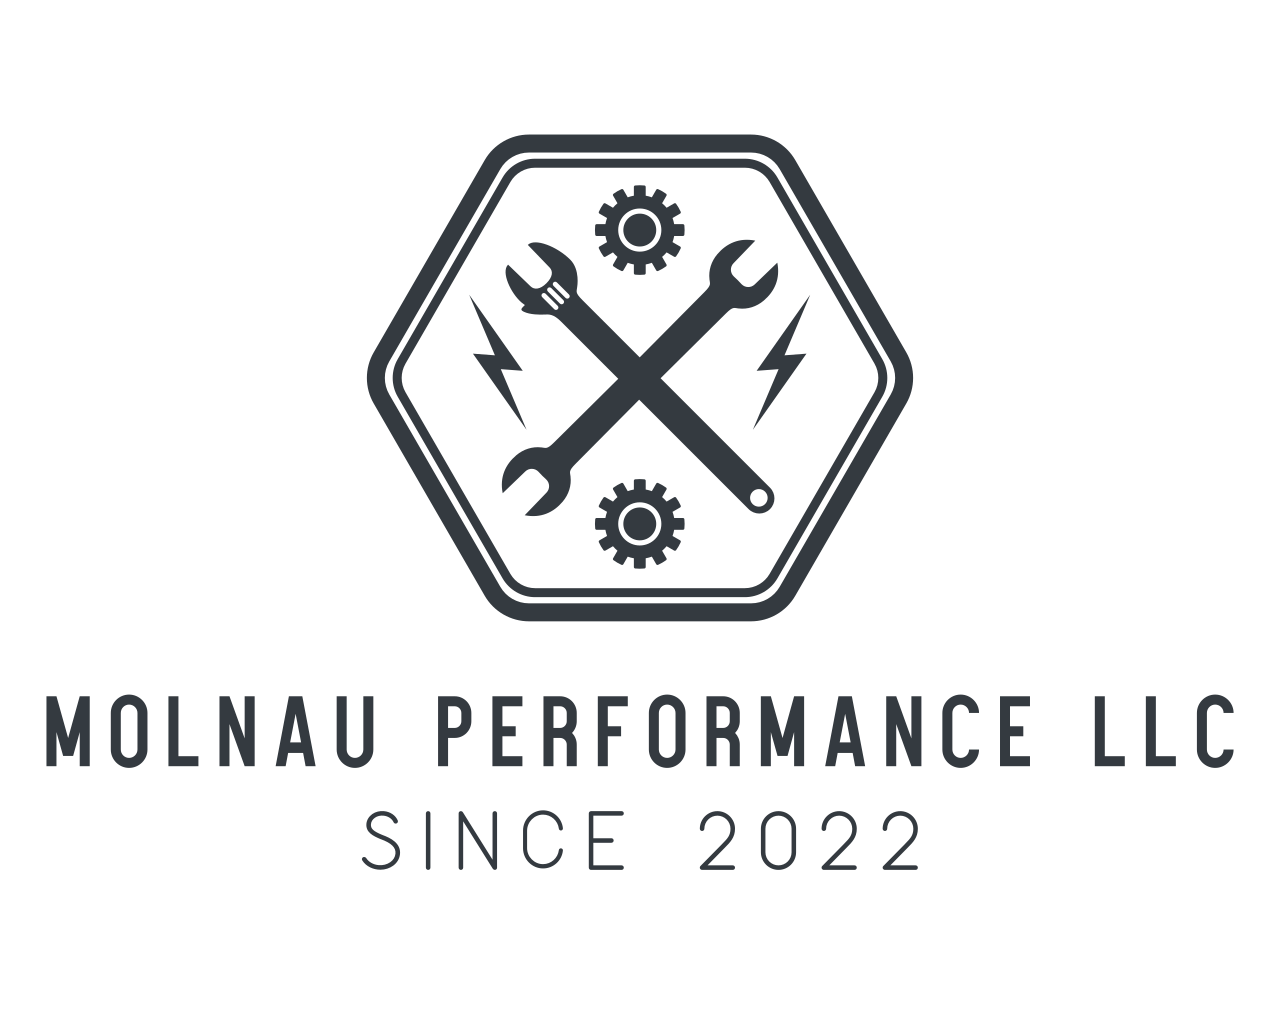 Molnau Performance LLC